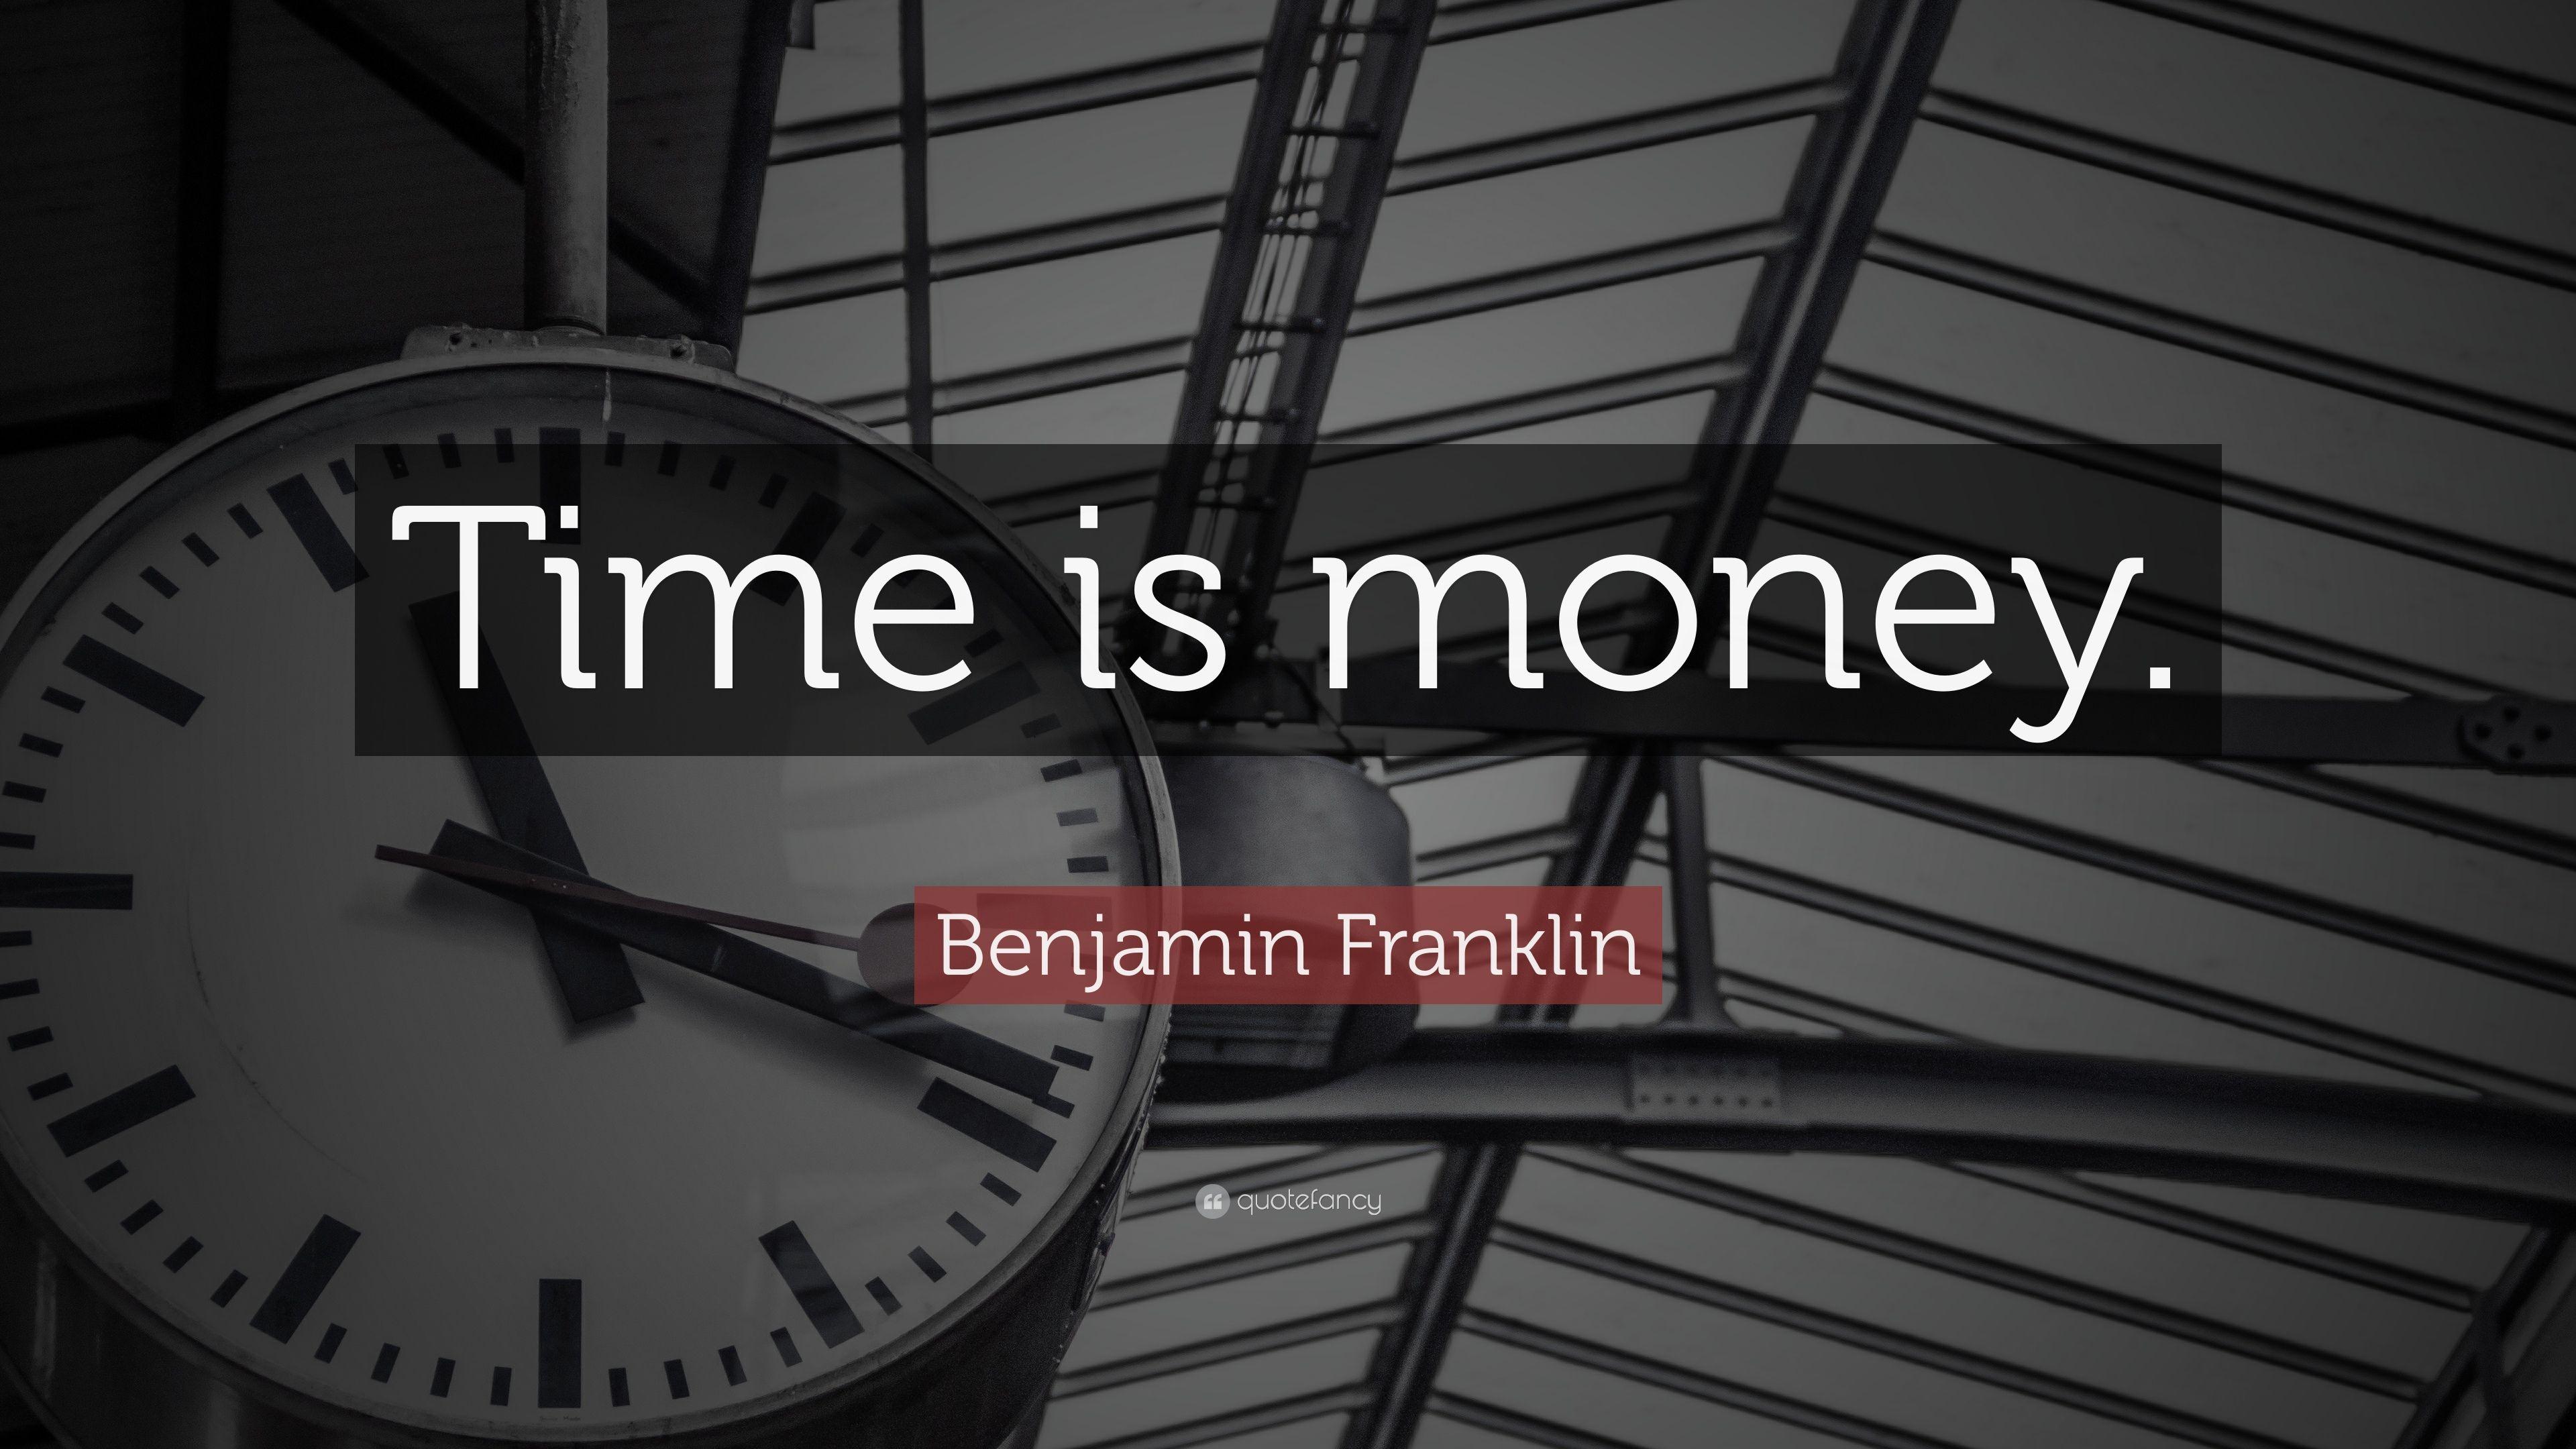 Benjamin Franklin Quote: “Time is money.” (12 wallpaper)